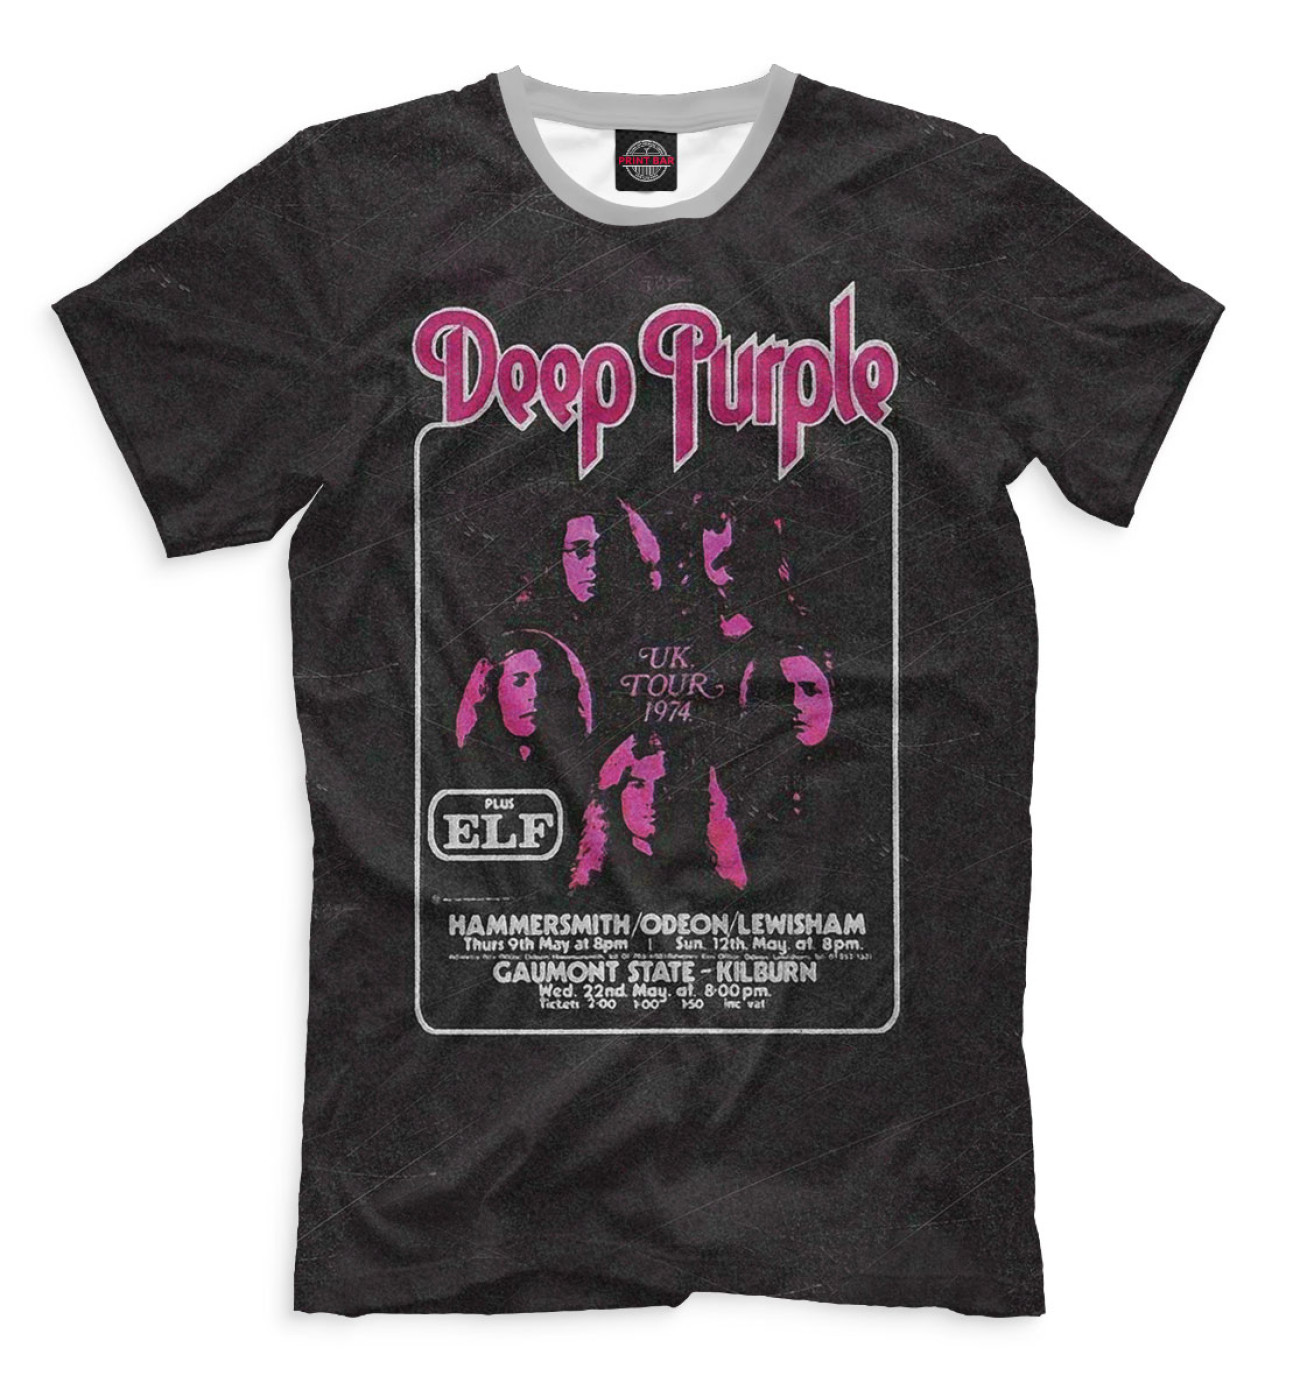 Мужская Футболка Deep Purple, артикул: PUR-606871-fut-2